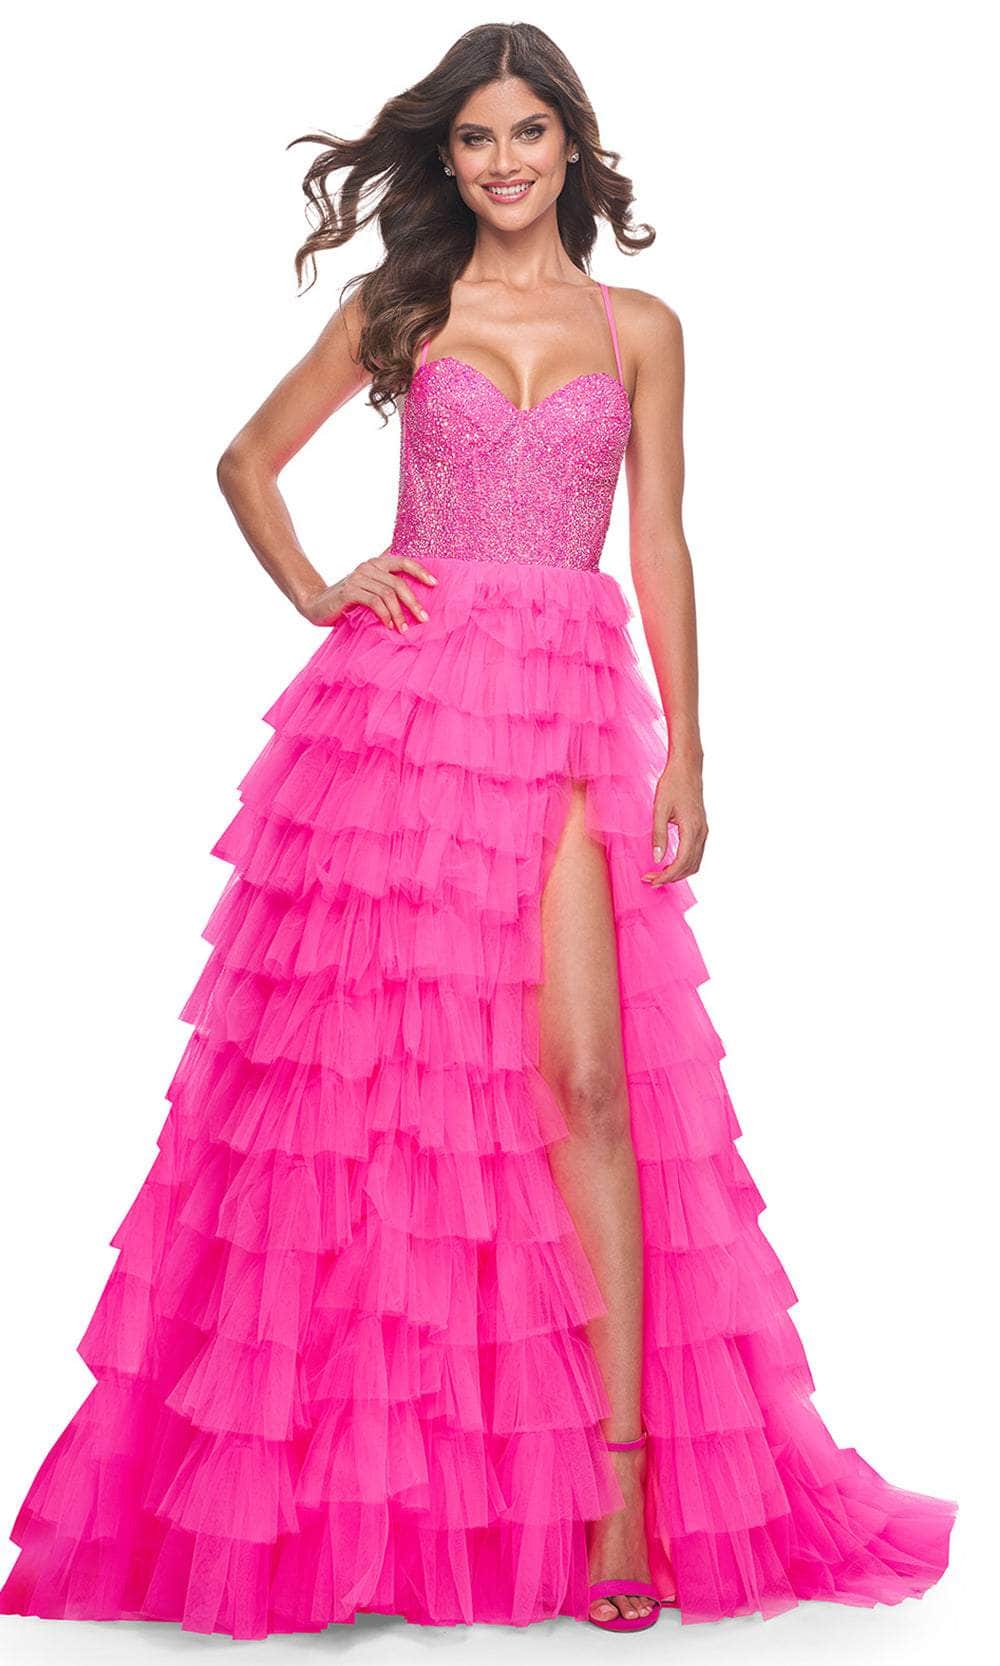 La Femme 32335 - Rhinestone Embellished Corset Ballgown Prom Dresses 00 / Neon Pink